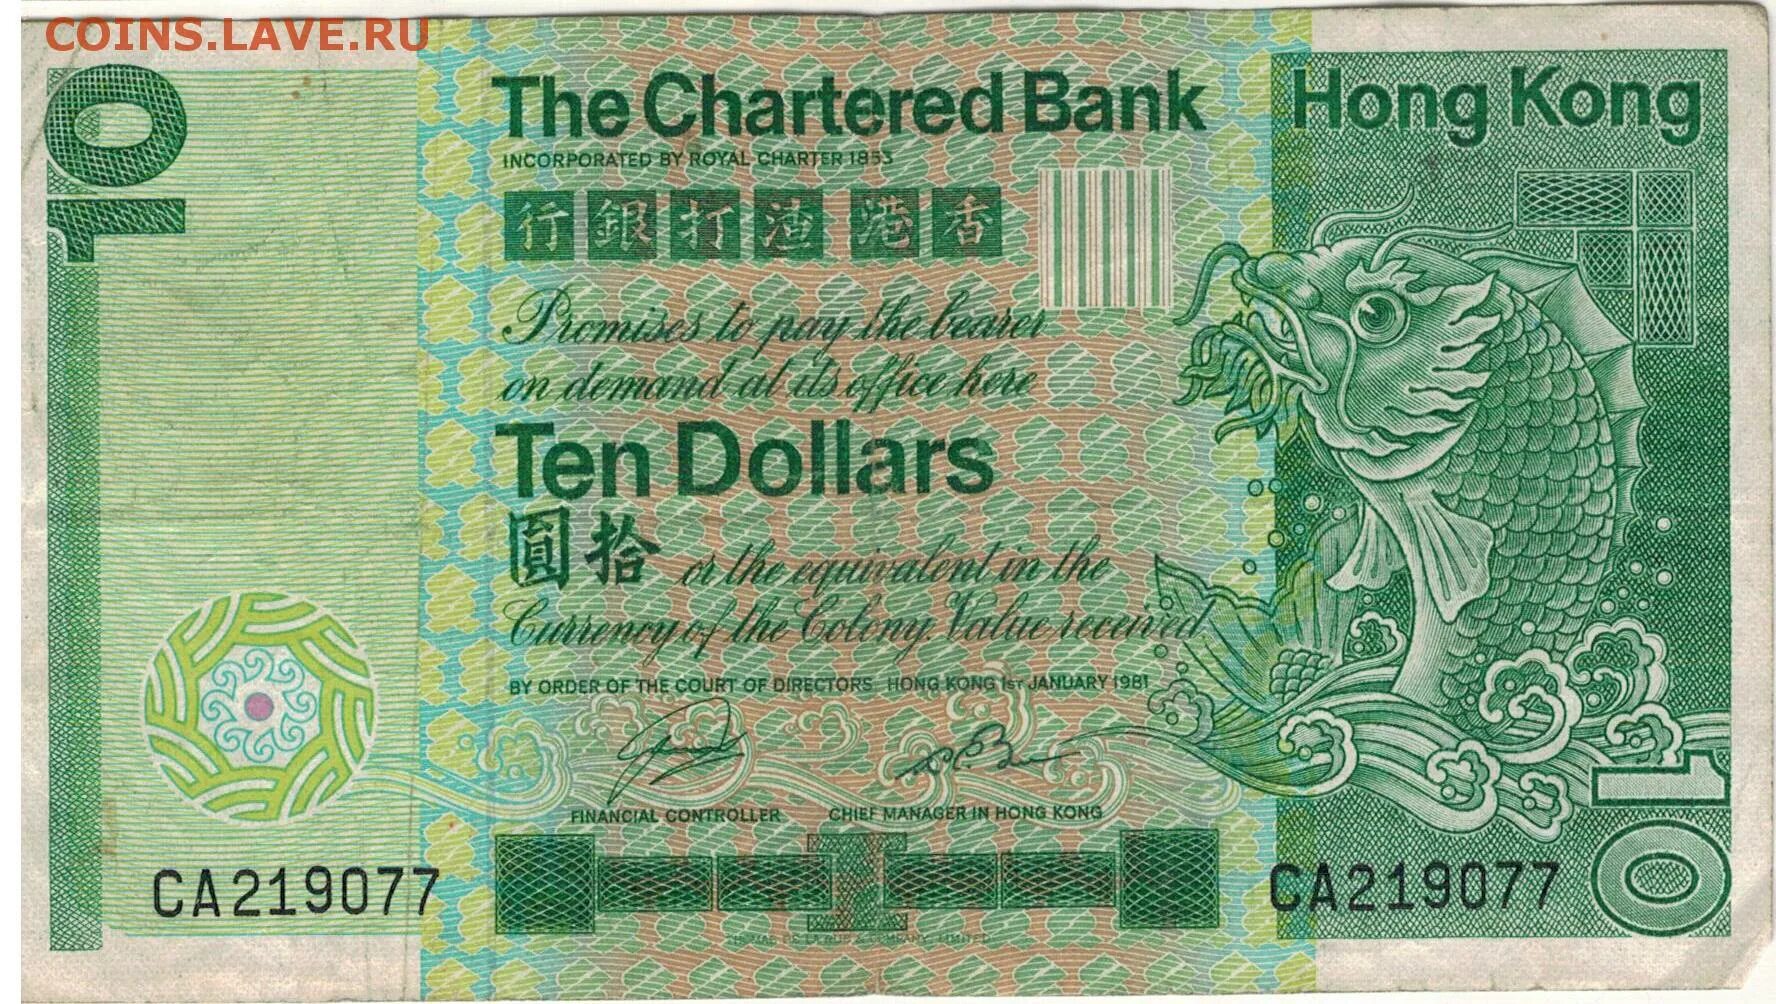 Доллар в 1995 году в рублях. 10 Гонконгских долларов. Гонконг 10 долларов 1994. 10 Гонконгских долларов купюра. Standard Chartered Bank.